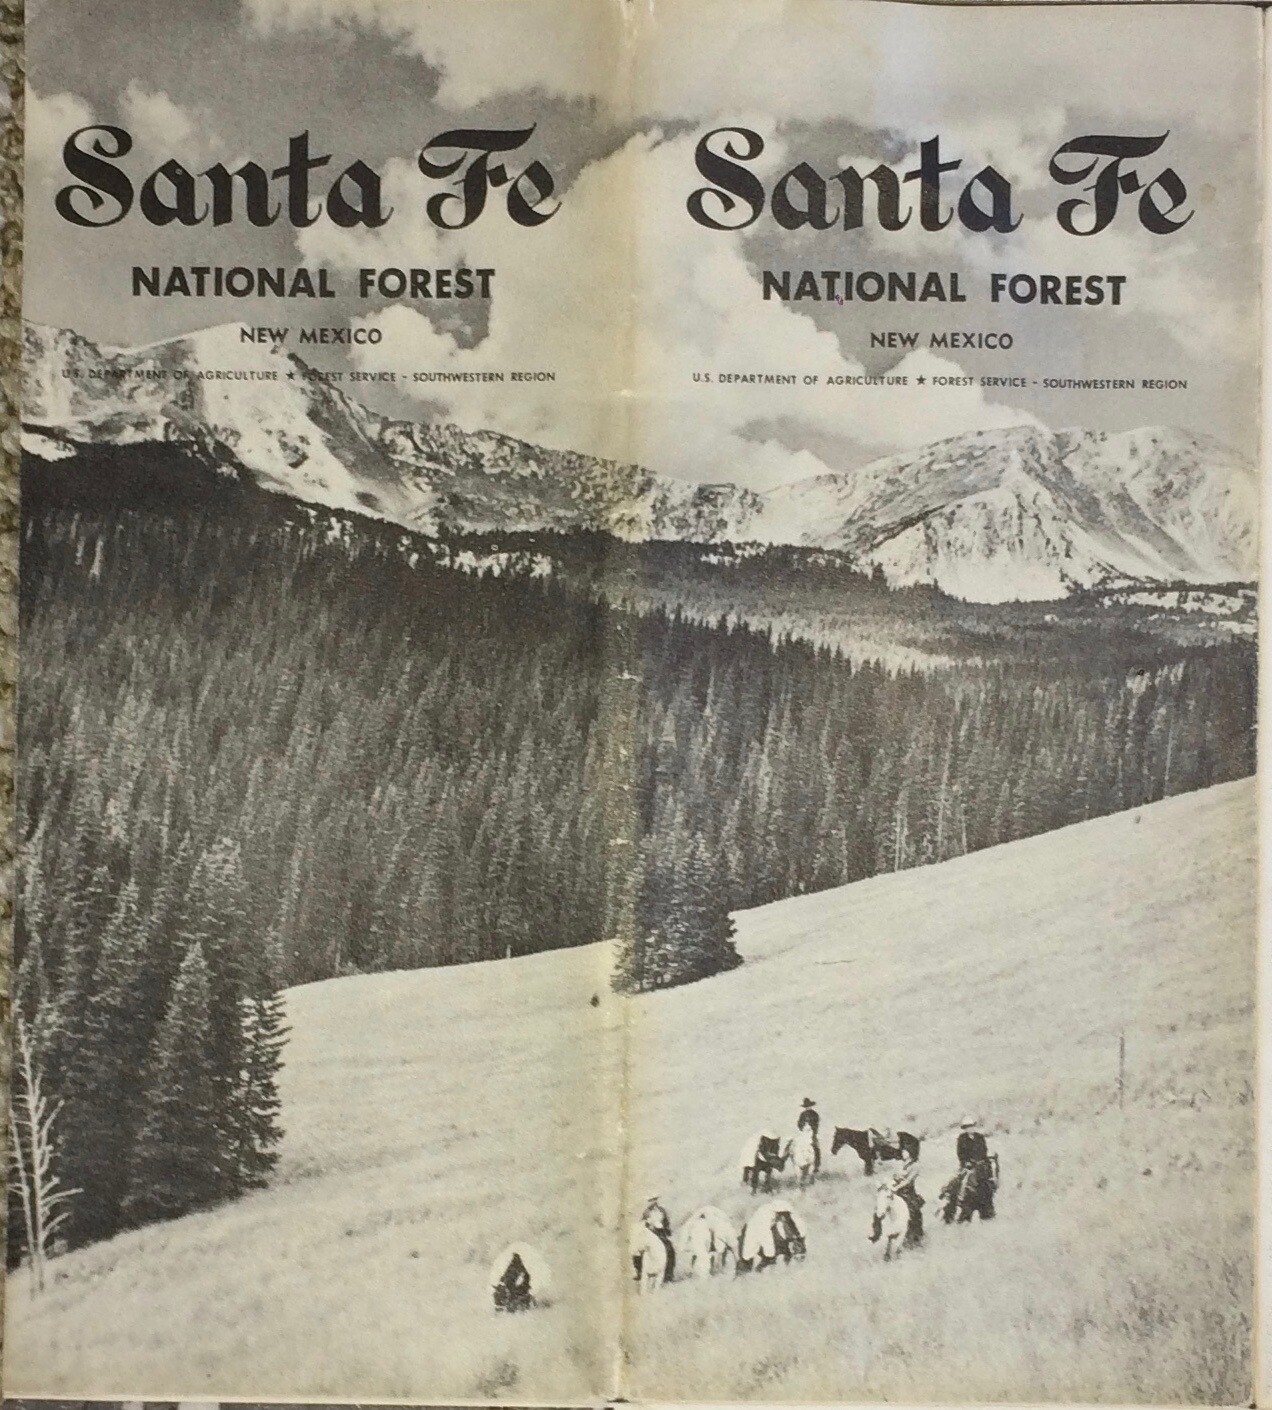 1960 Santa Fe National Forest w/ Taos, Santa Fe, etc